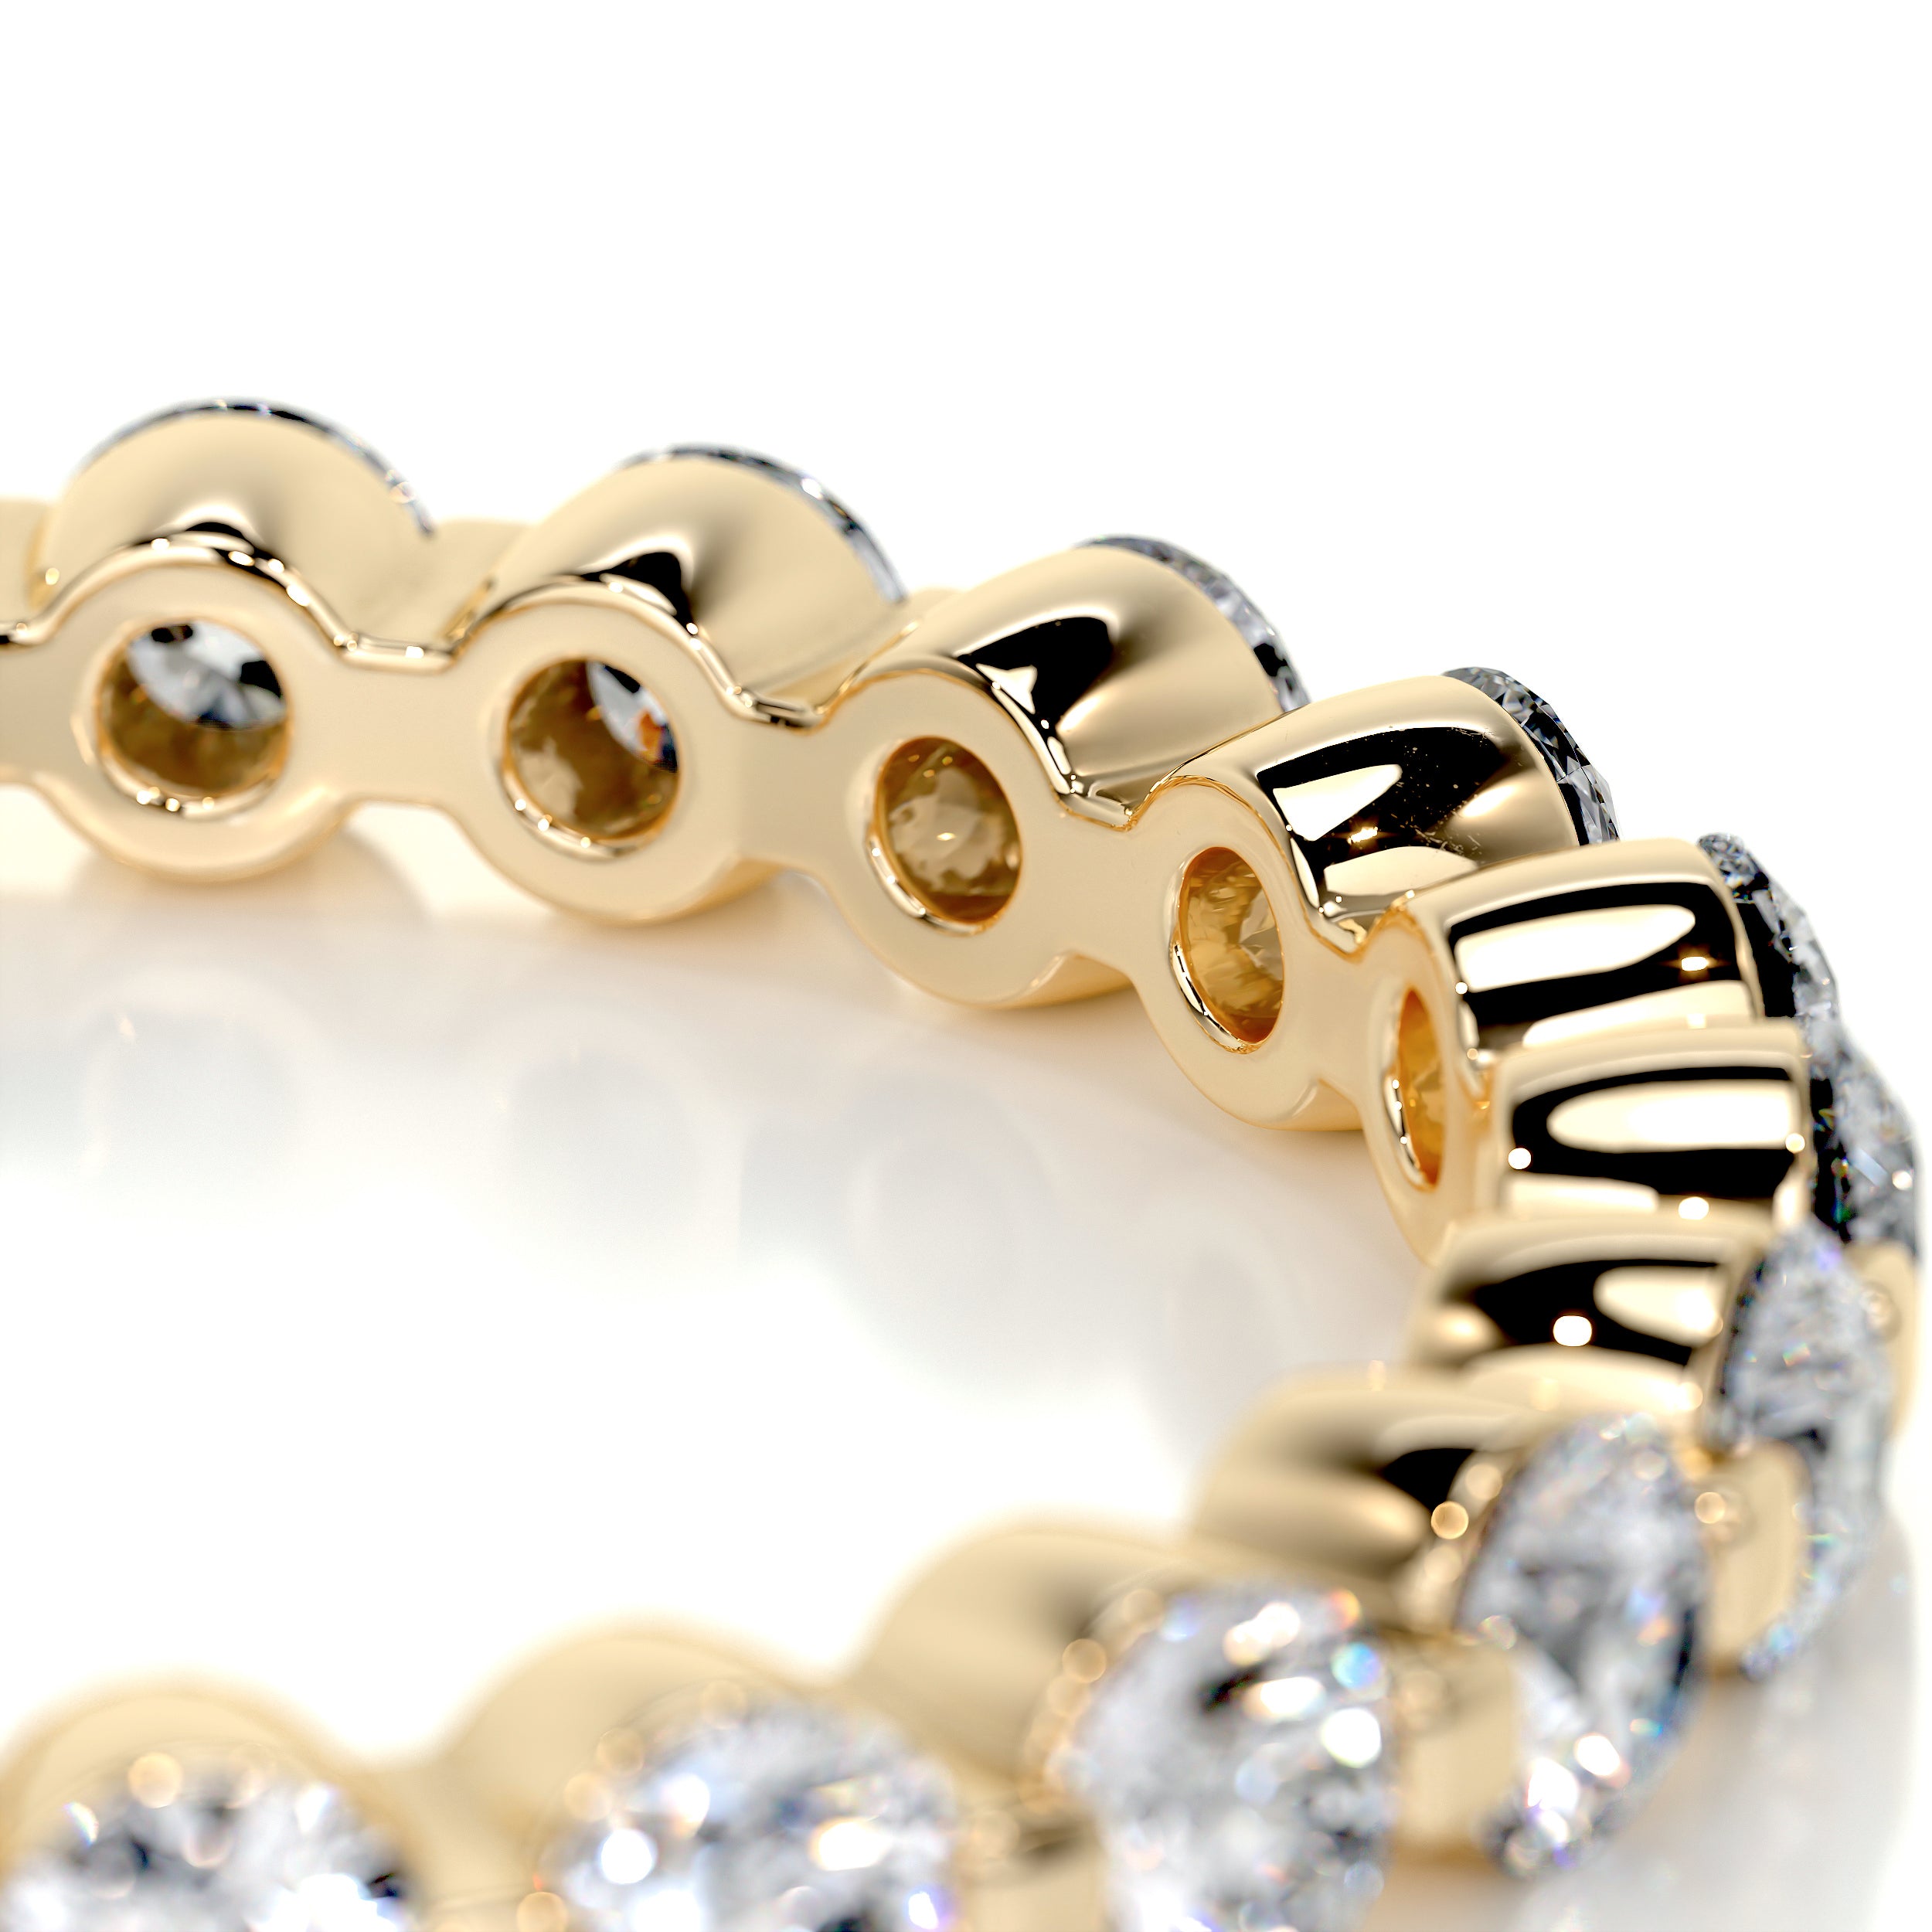 Josie Eternity Wedding Ring   (1 Carat) -18K Yellow Gold